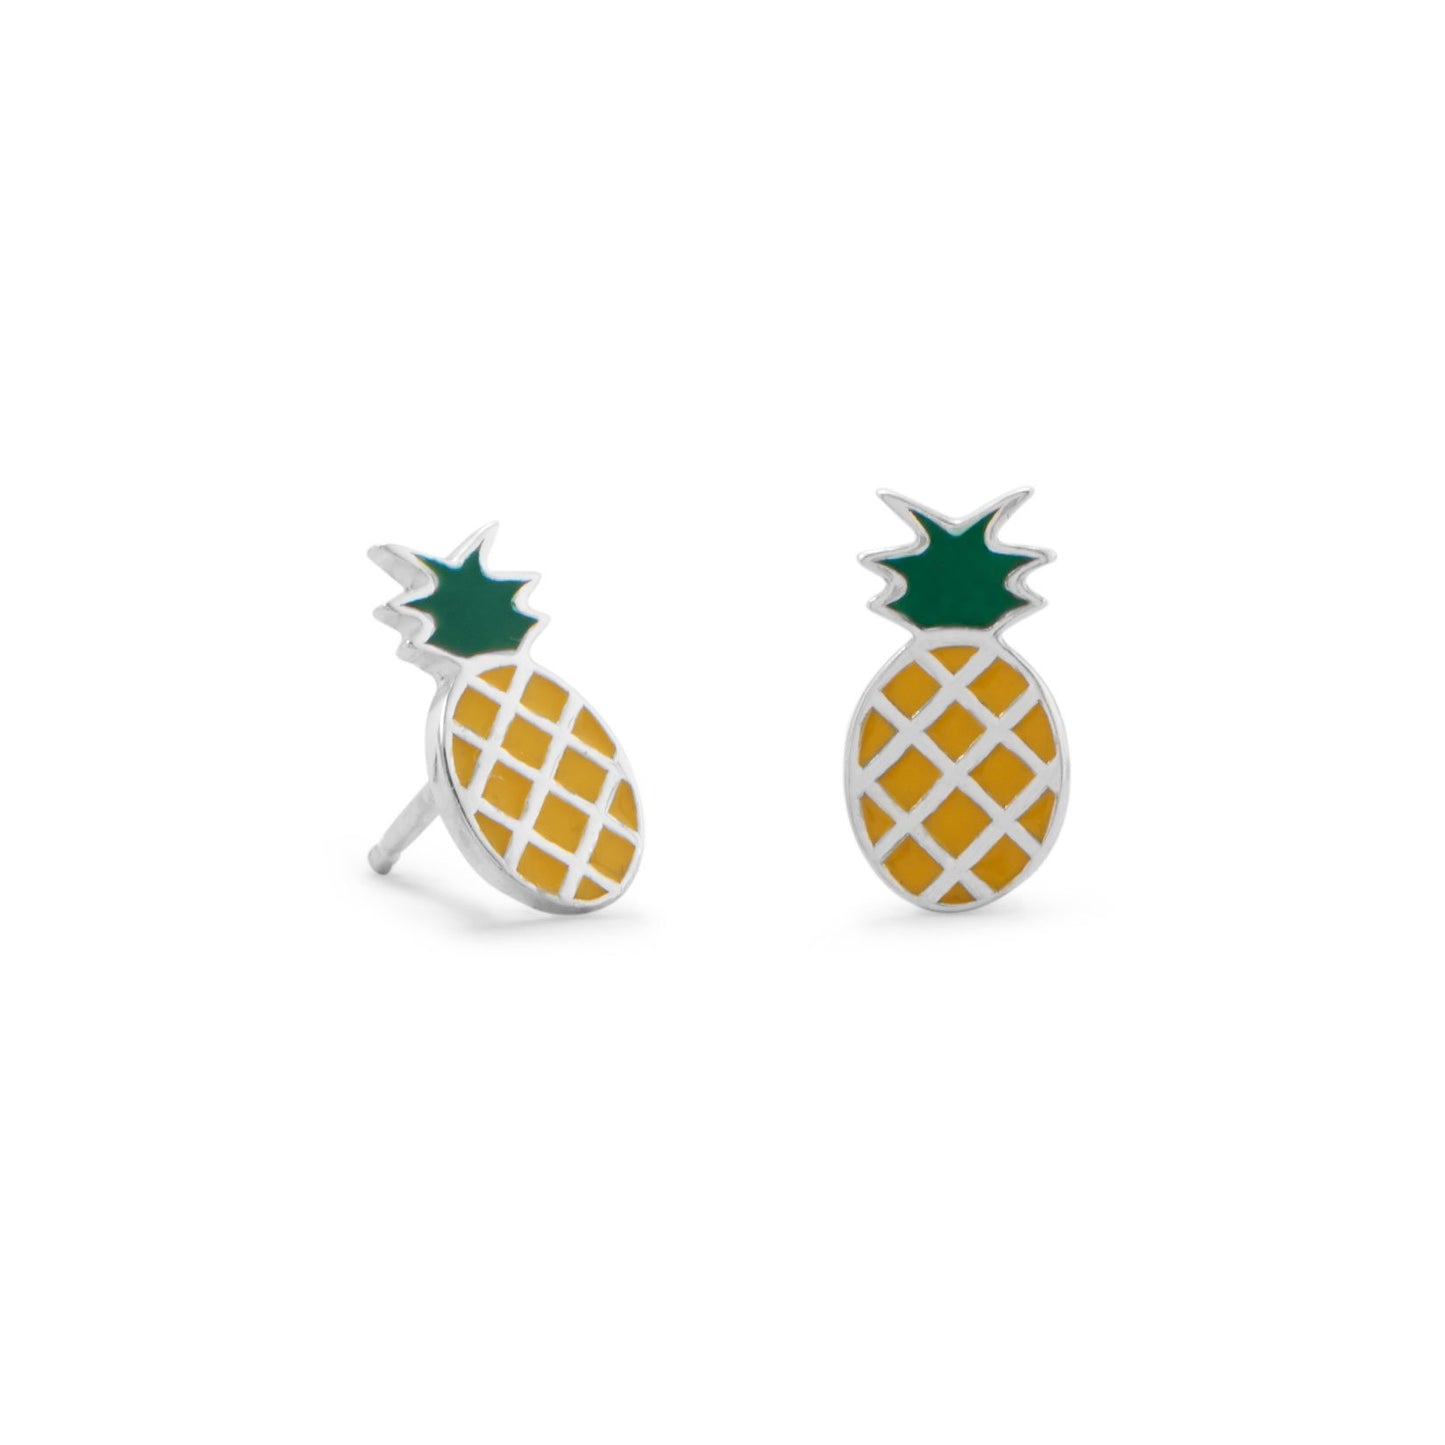 Sterling Silver and Enamel Pineapple Earring Studs